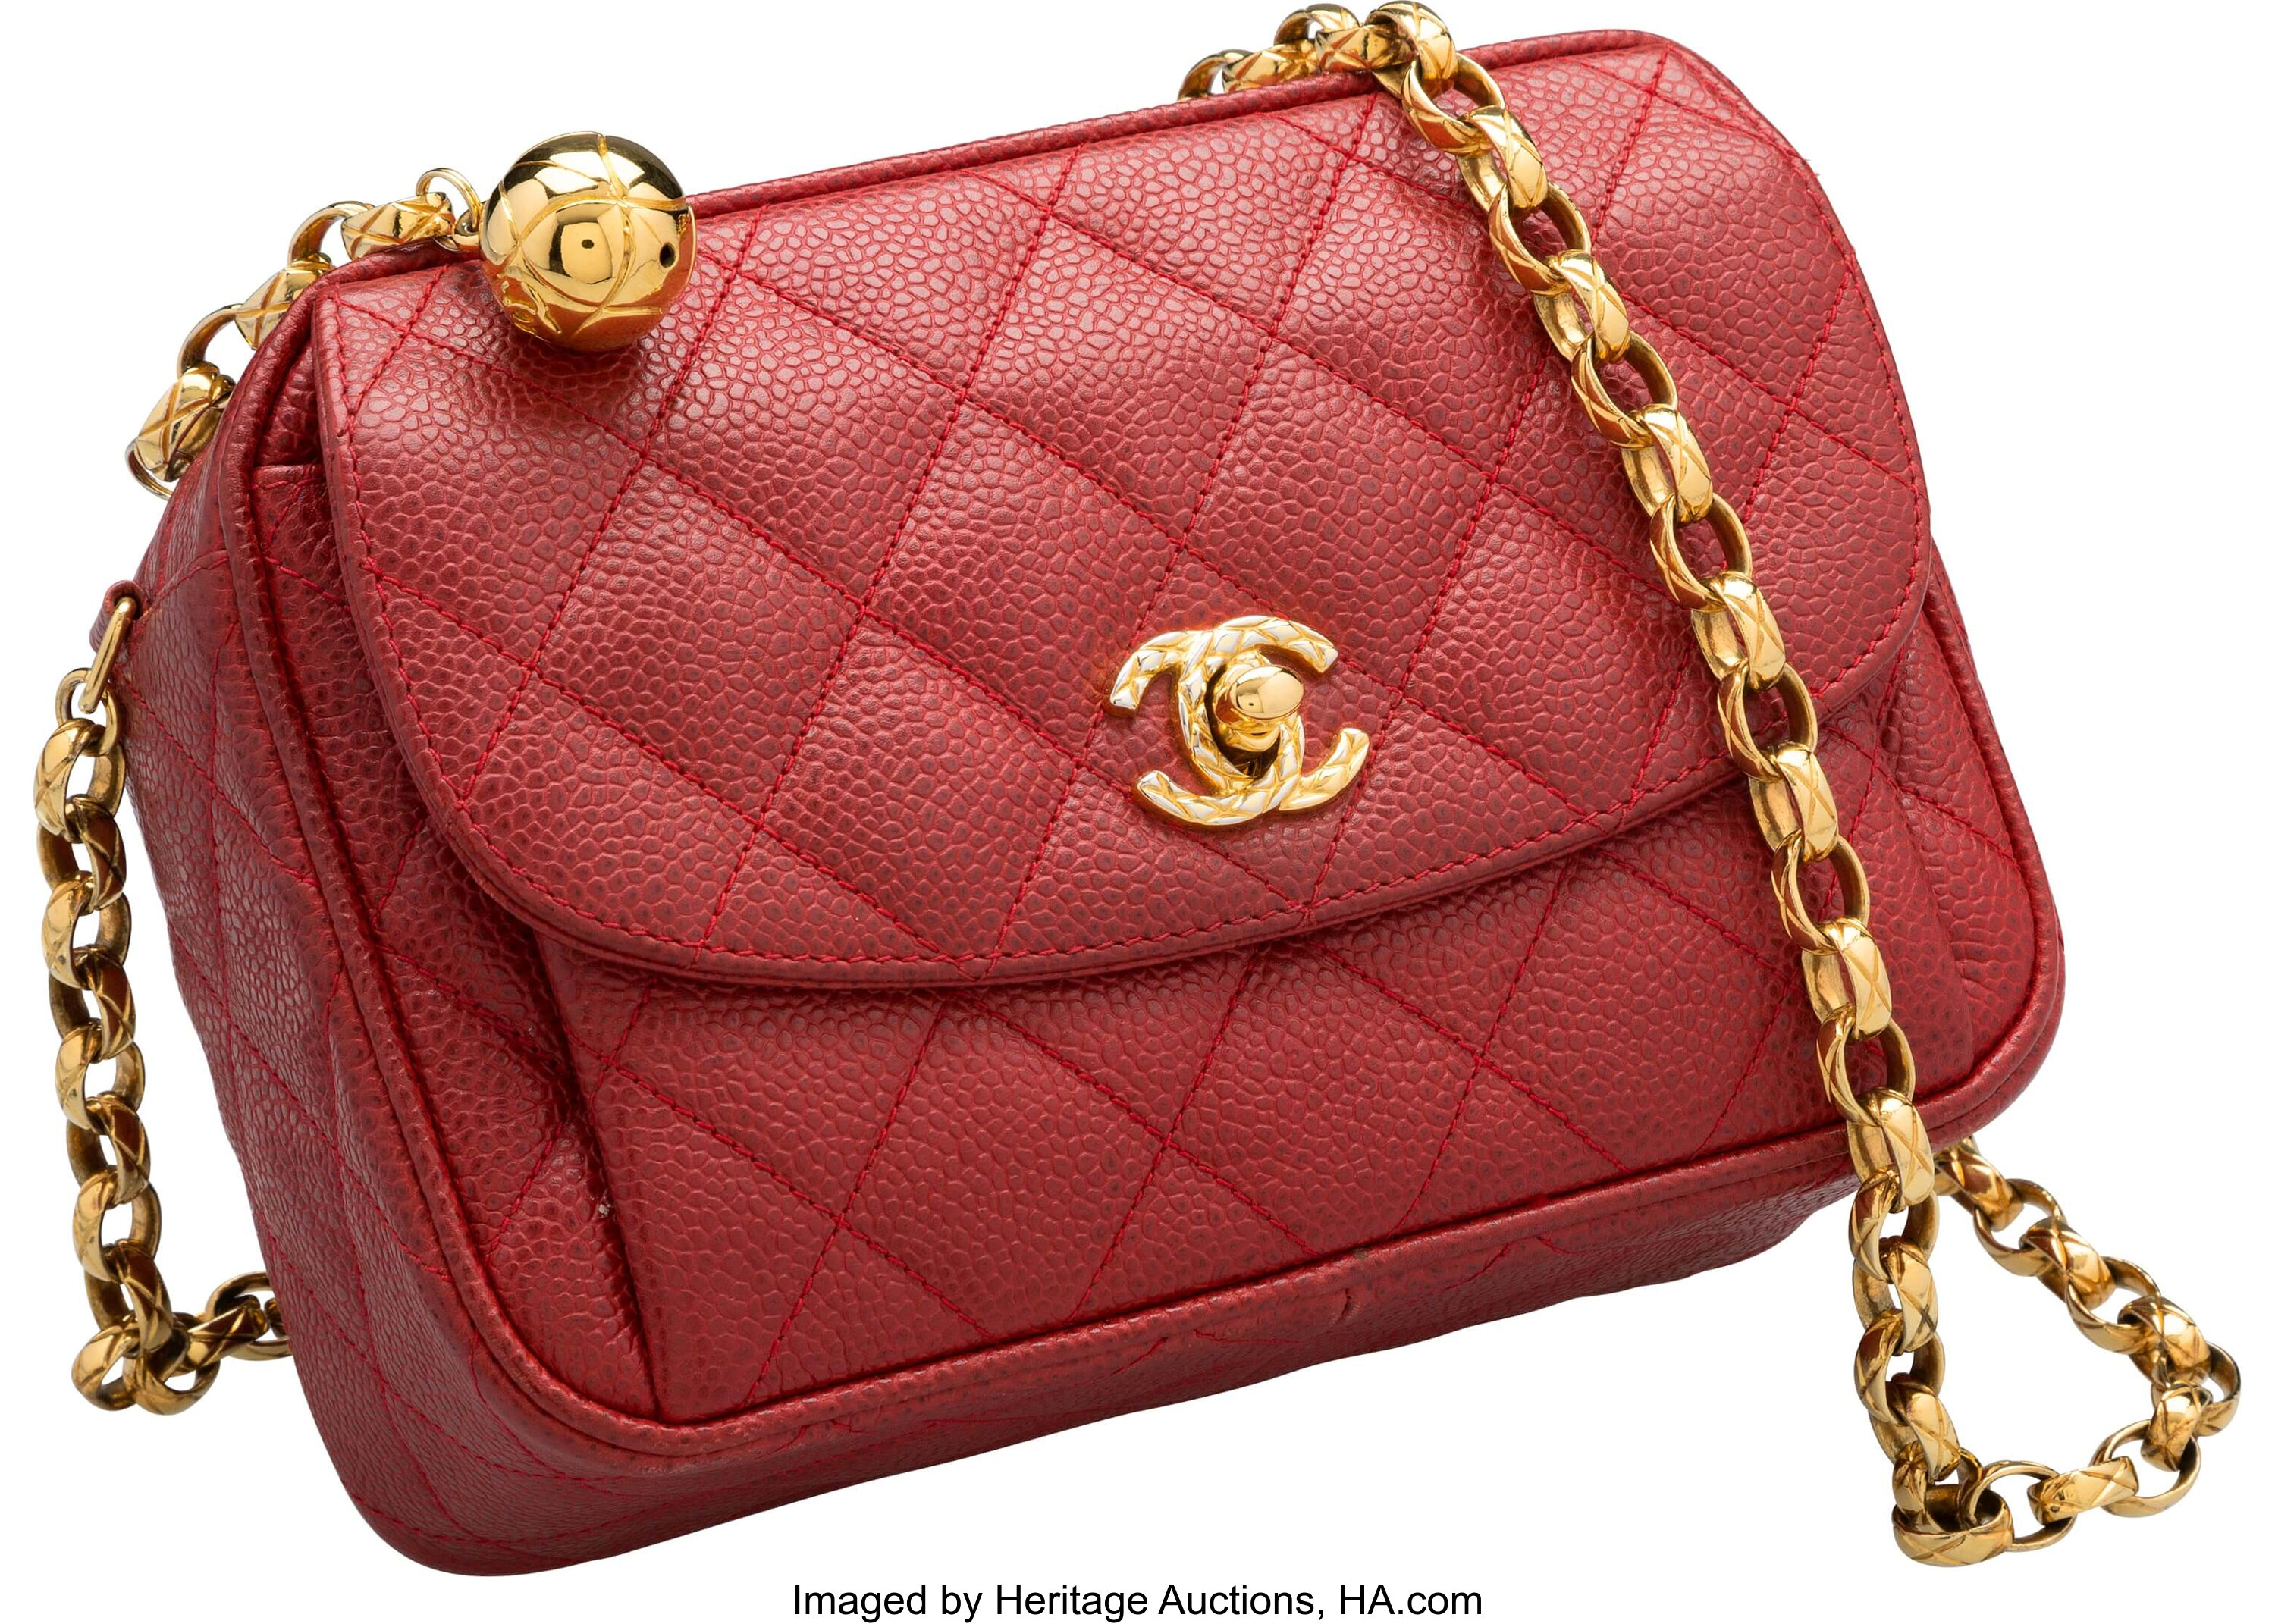 At Auction: Authentic Chanel Suede Camera Shoulder Bag